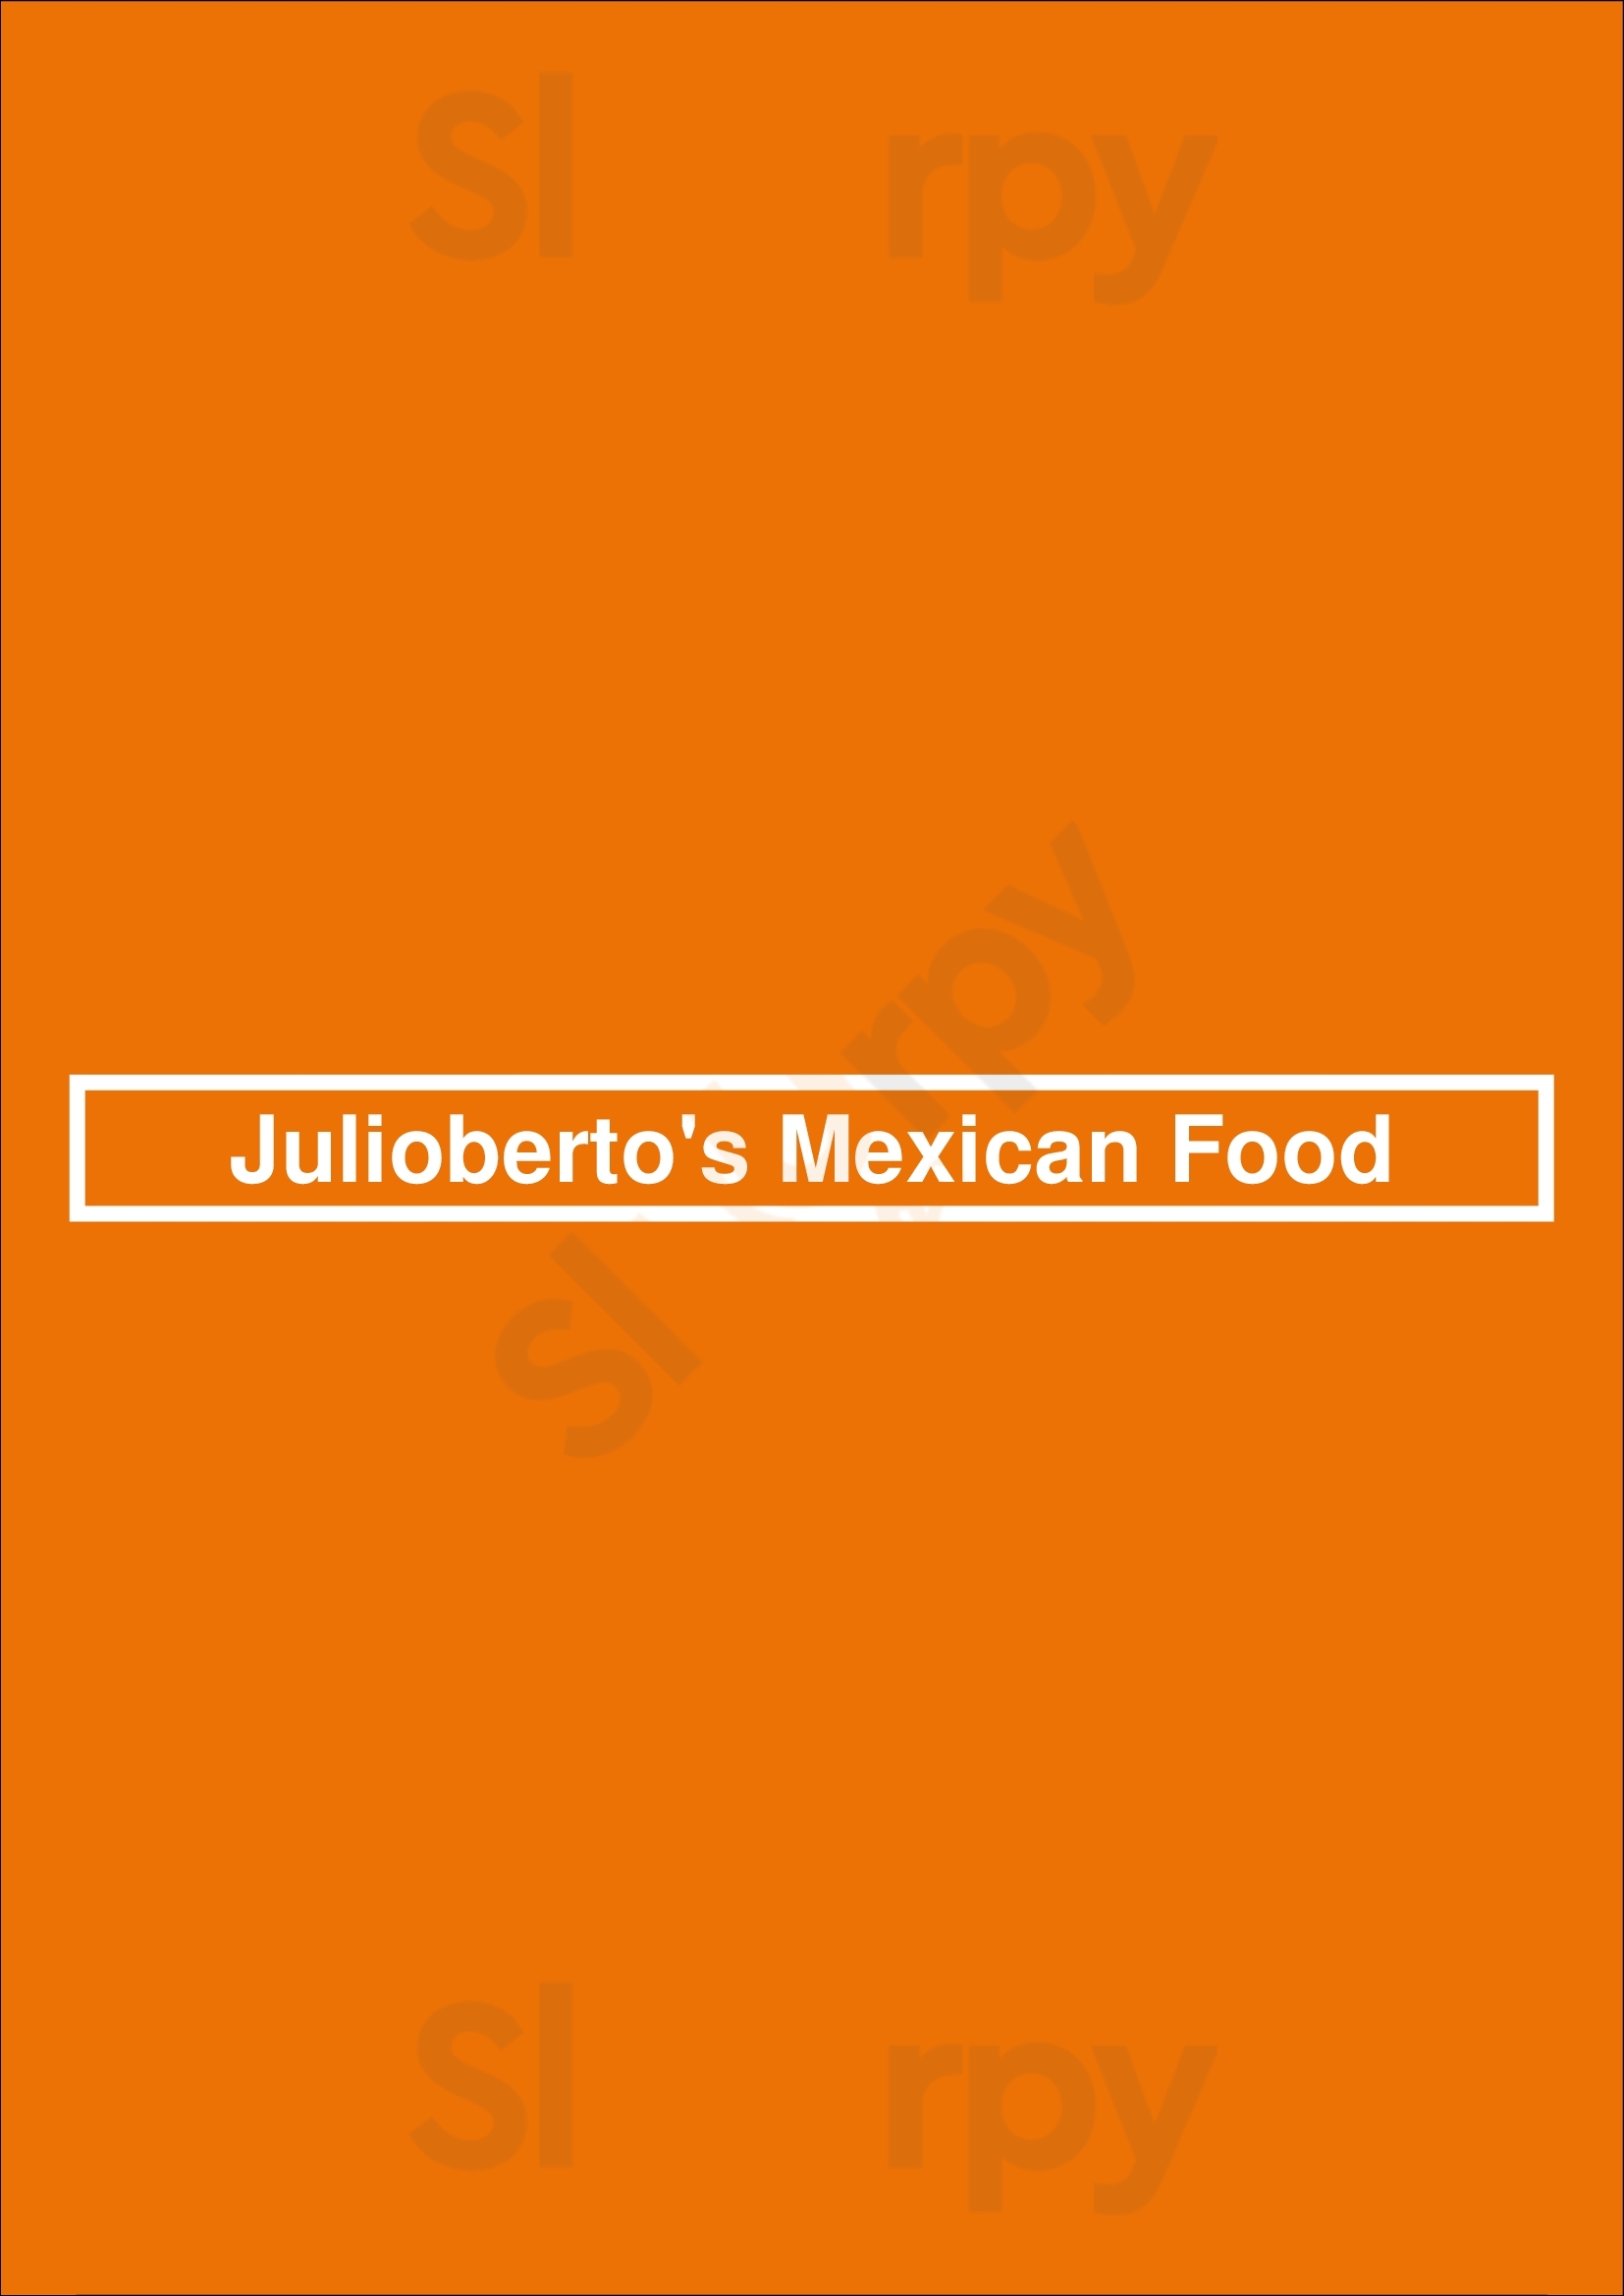 Julioberto's Mexican Food Phoenix Menu - 1